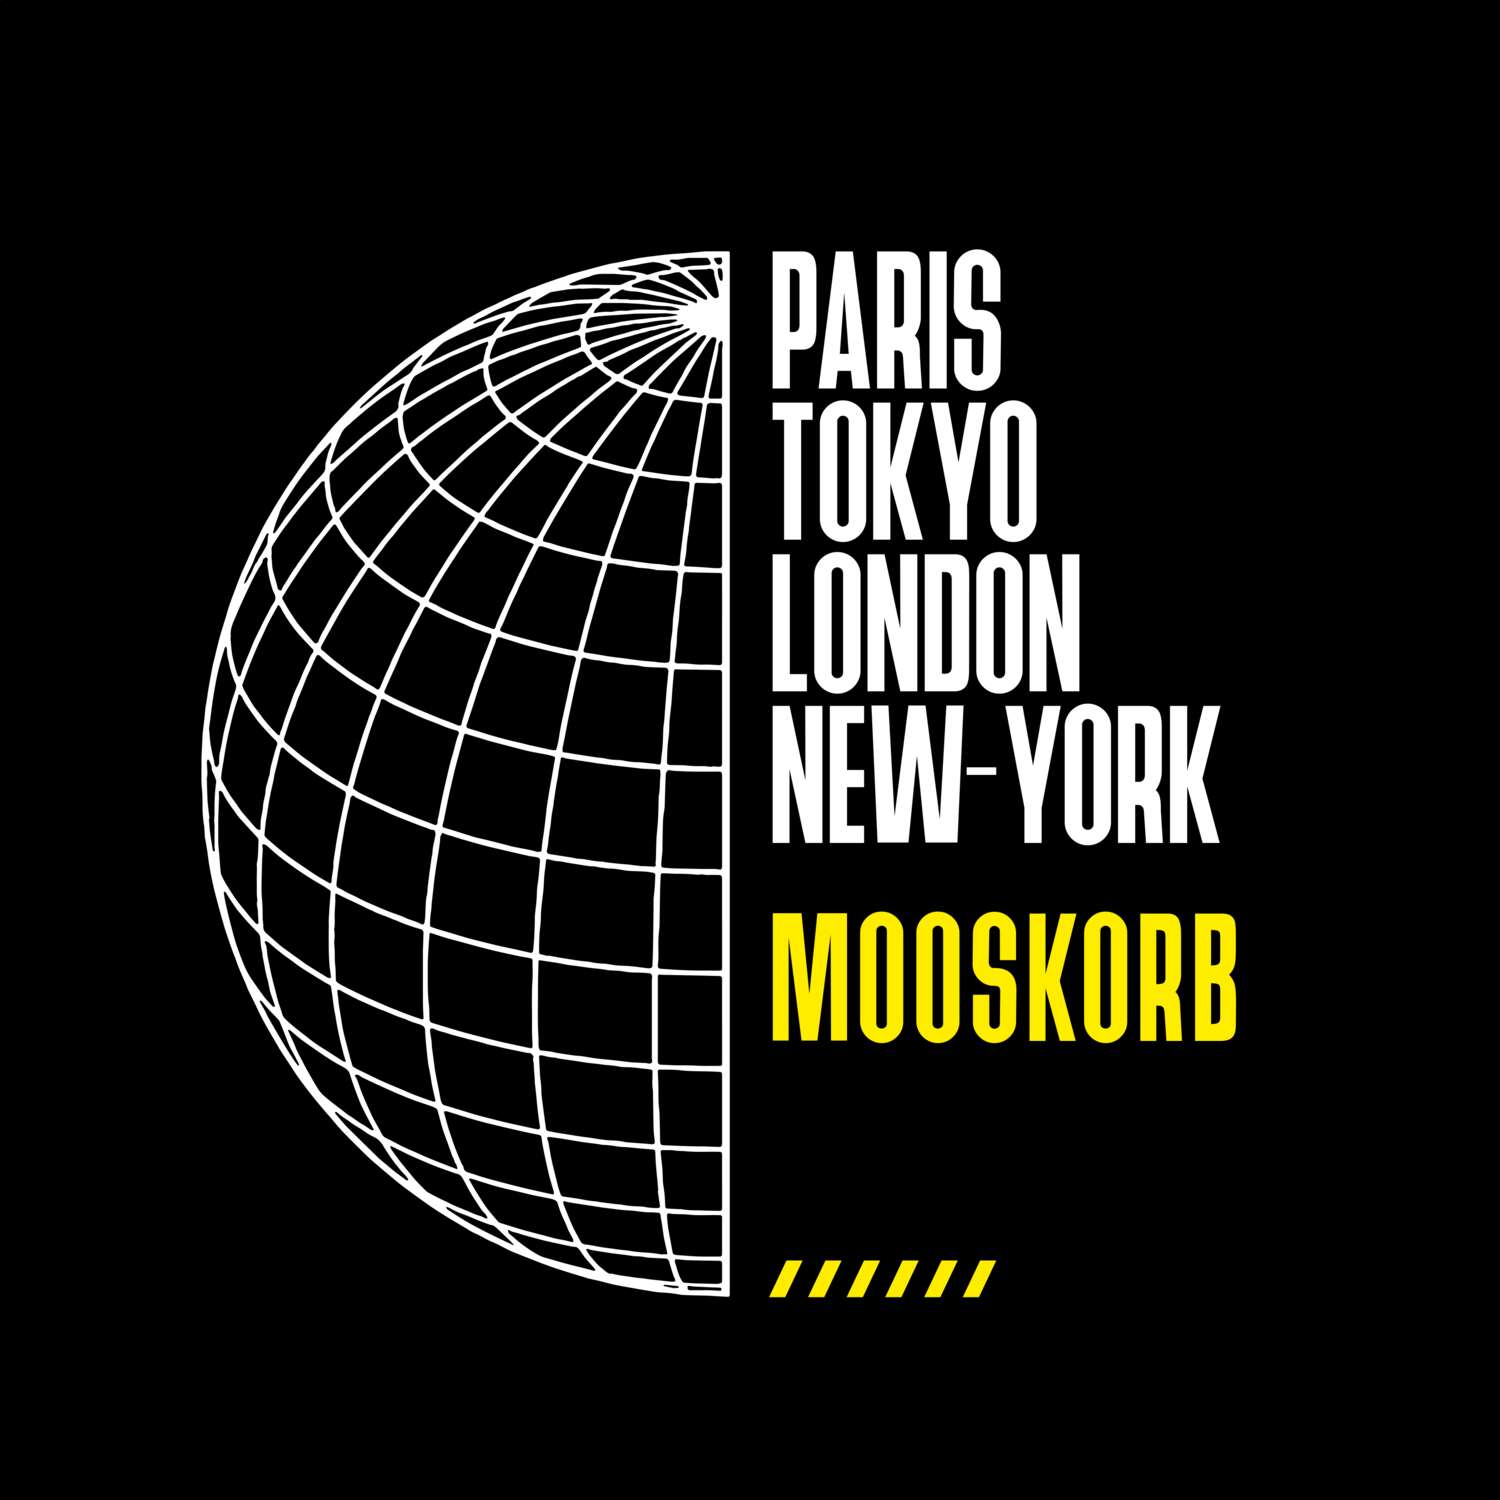 Mooskorb T-Shirt »Paris Tokyo London«